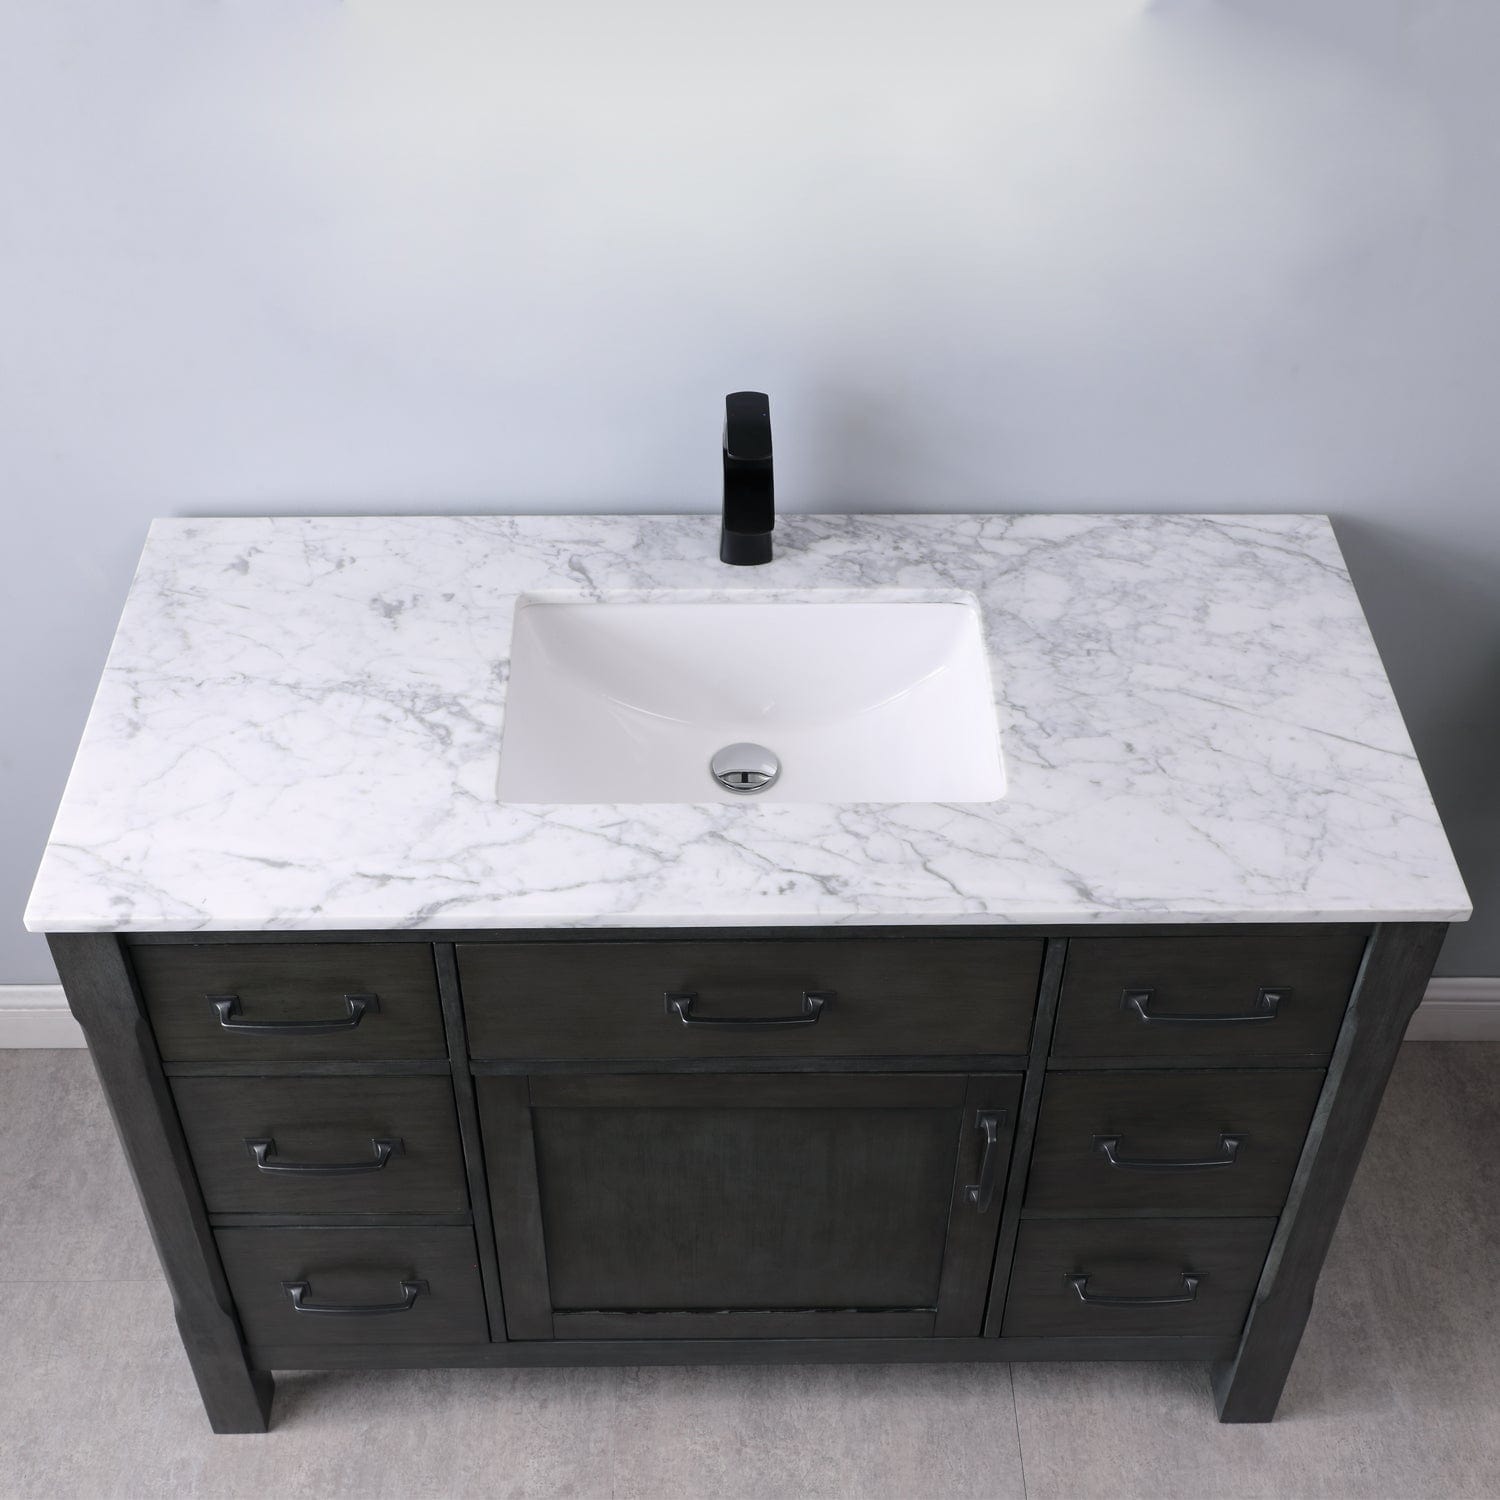 Altair Maribella 48" Single Bathroom Vanity Set in Rust Black and Carrara White Marble Countertop without Mirror 535048-RL-CA-NM - Molaix631112970327Vanity535048-RL-CA-NM